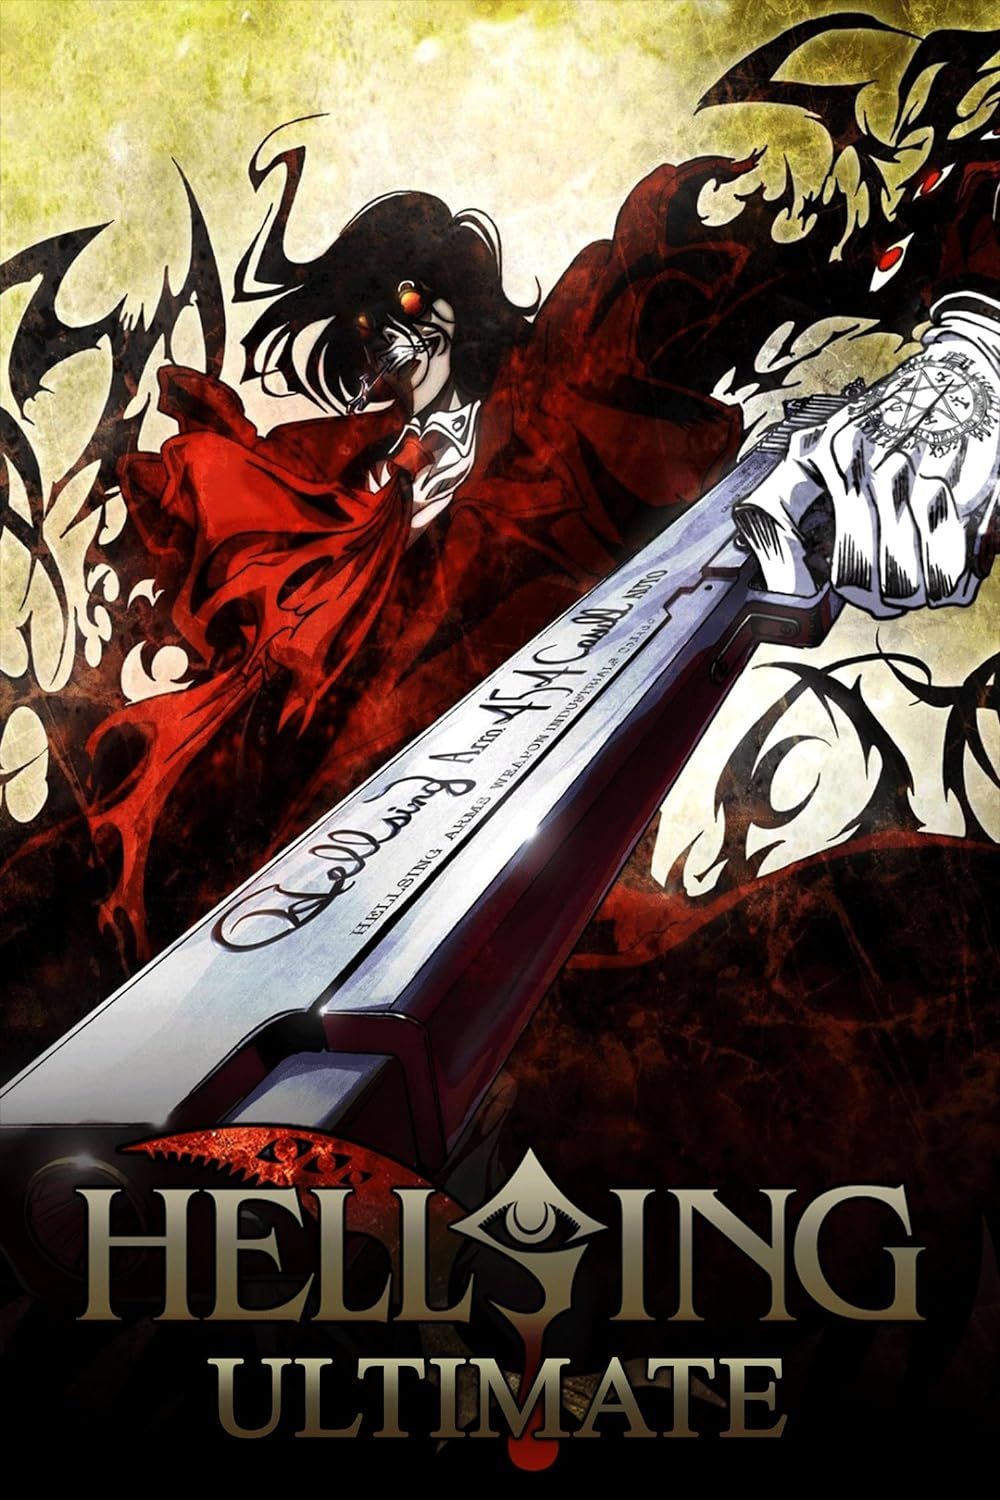 Alucard empunha uma espada no pôster de Hellsing Ultimate